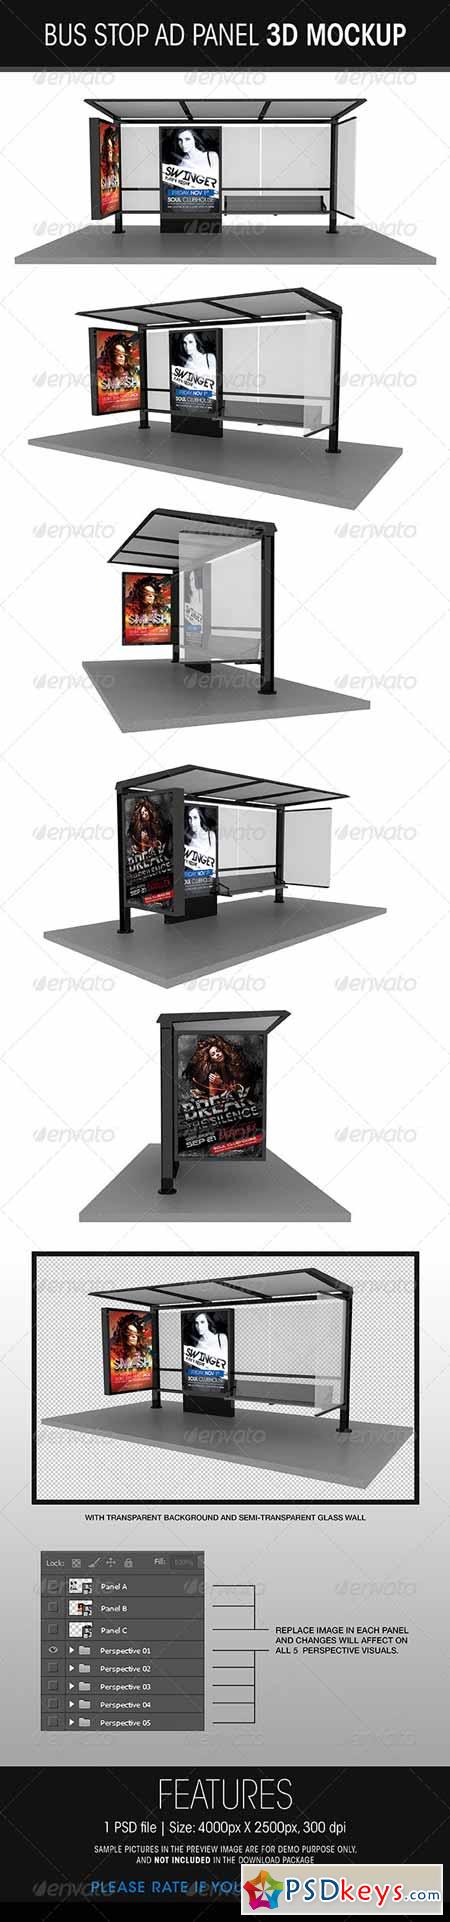 Bus Stop Ad Panel 3D Mockup 5756973